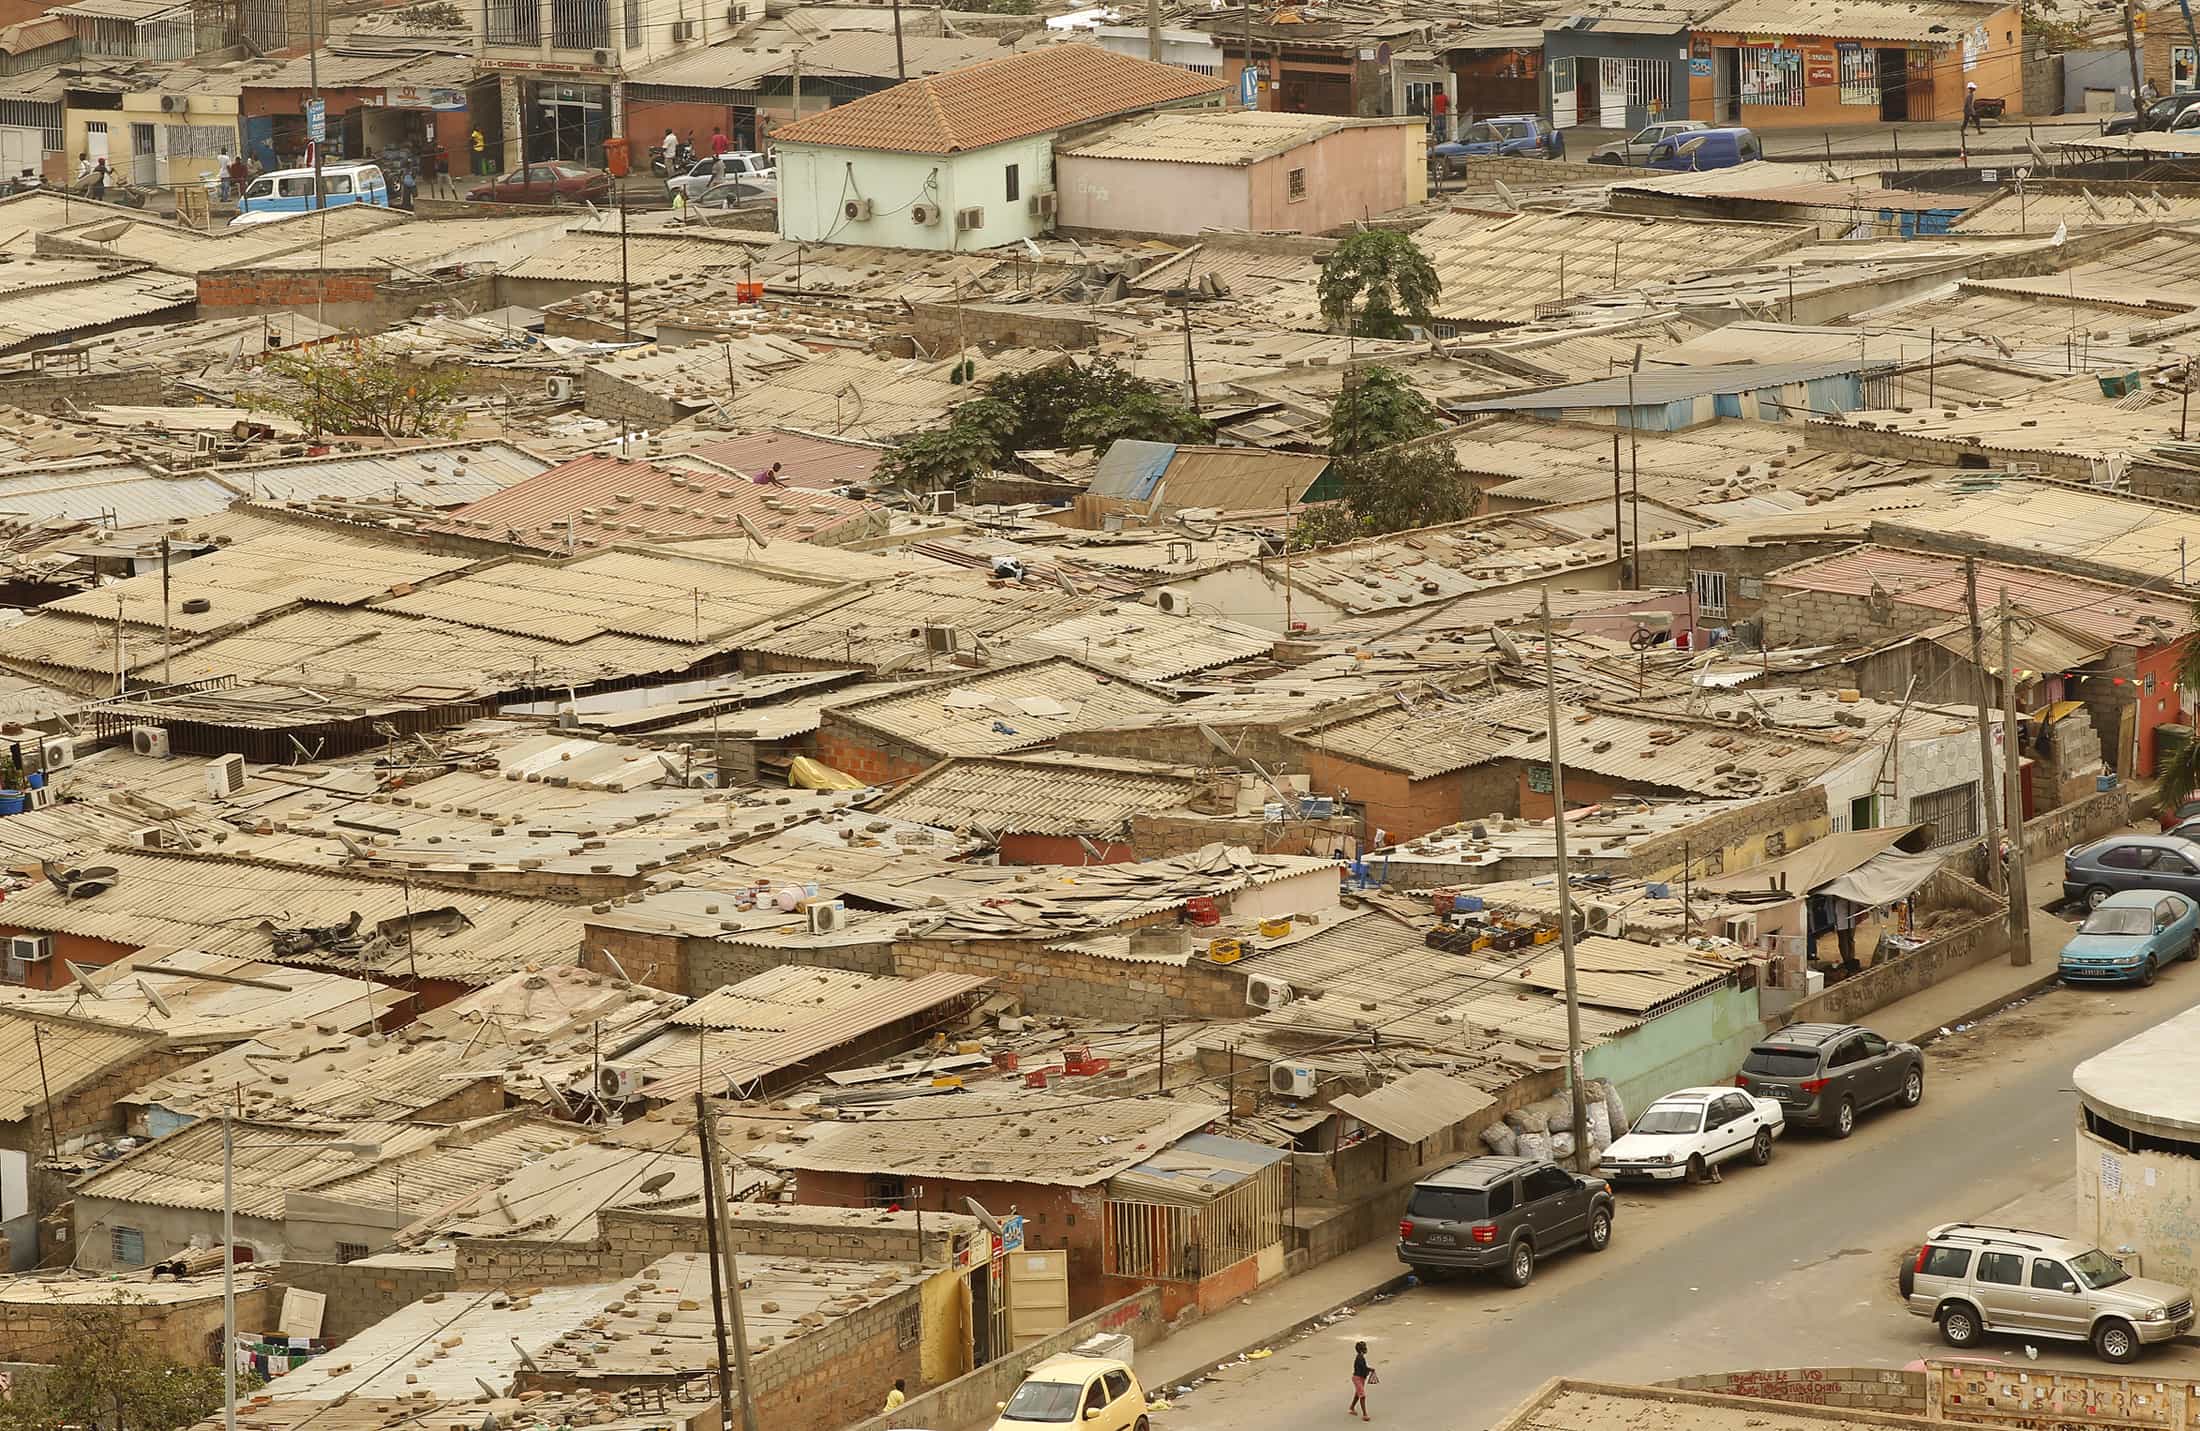 Informal settlements are seen in Luanda, Angola, 30 August 2012, REUTERS/Siphiwe Sibeko